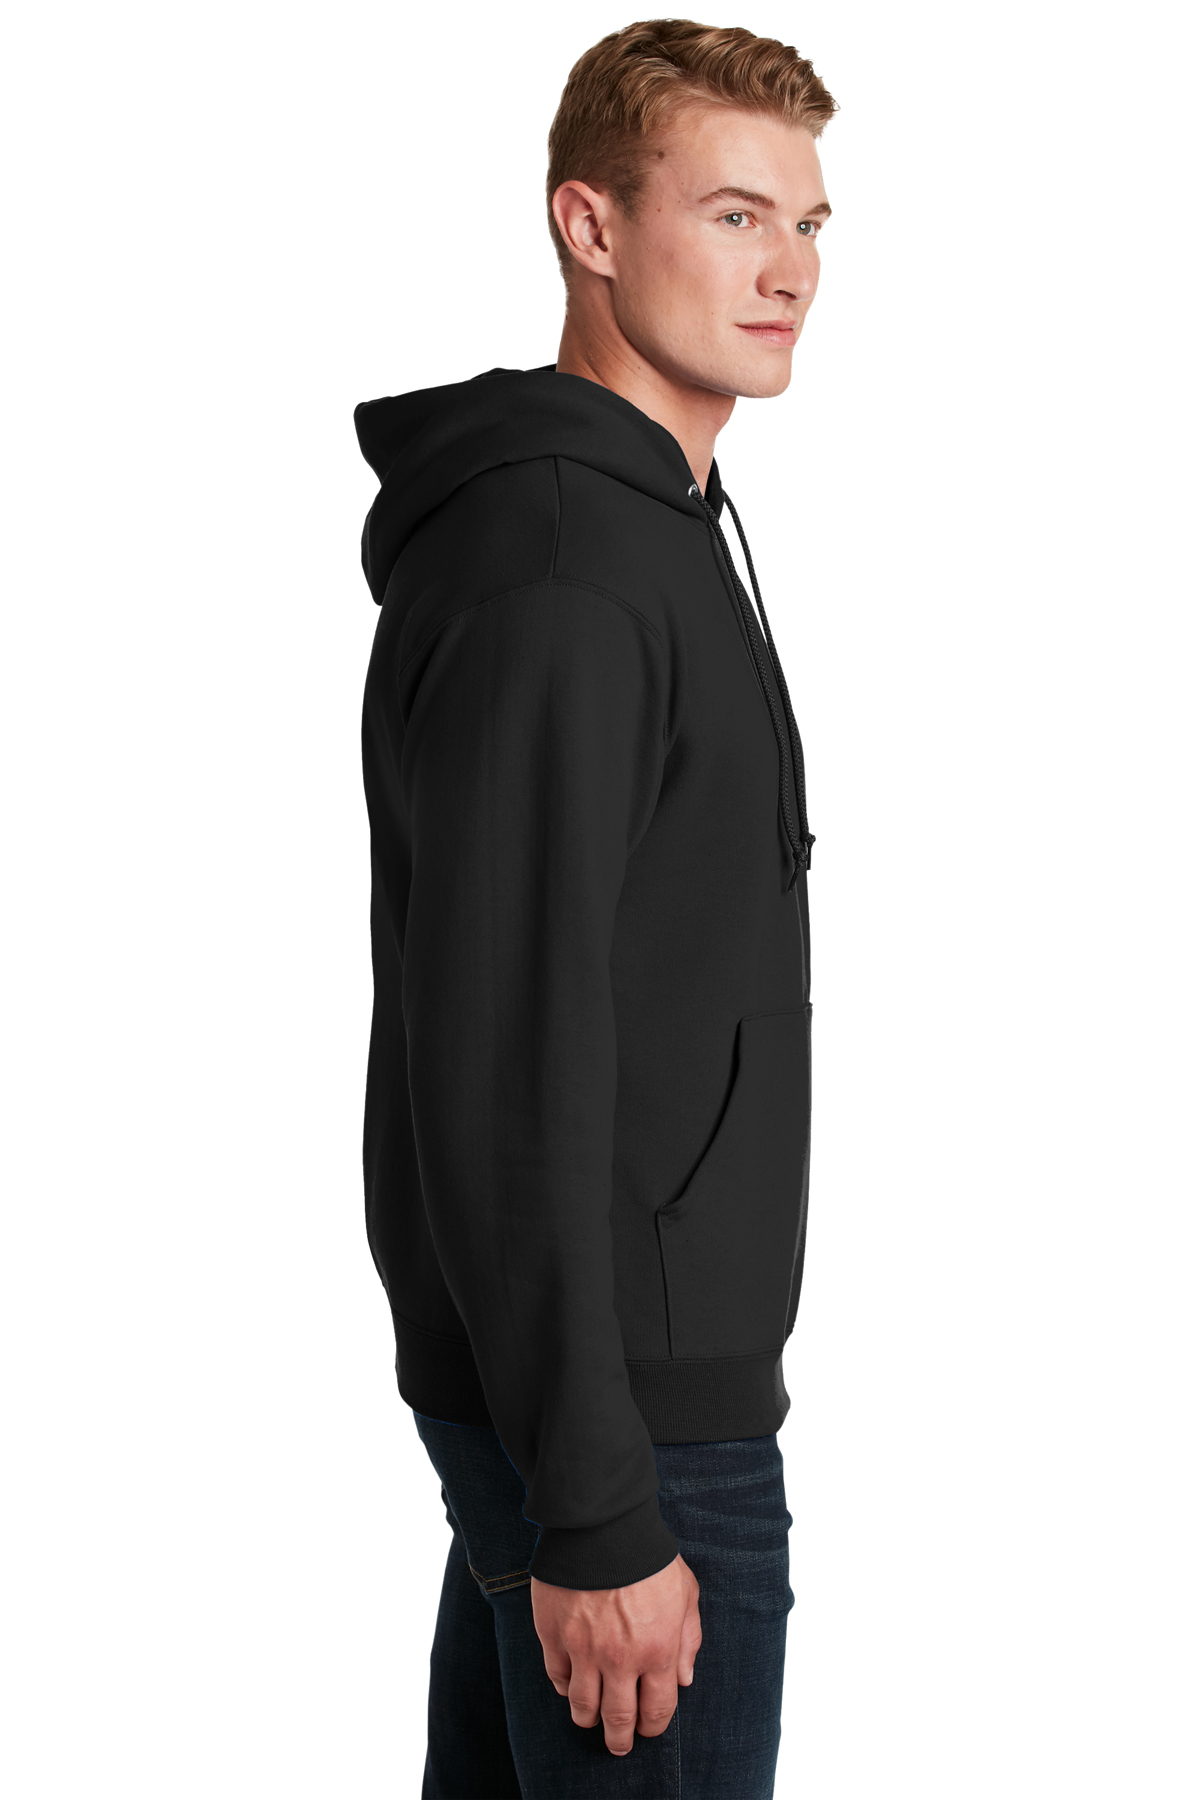 JERZEES SUPER SWEATS NuBlend - Pullover Hooded Sweatshirt | Product ...